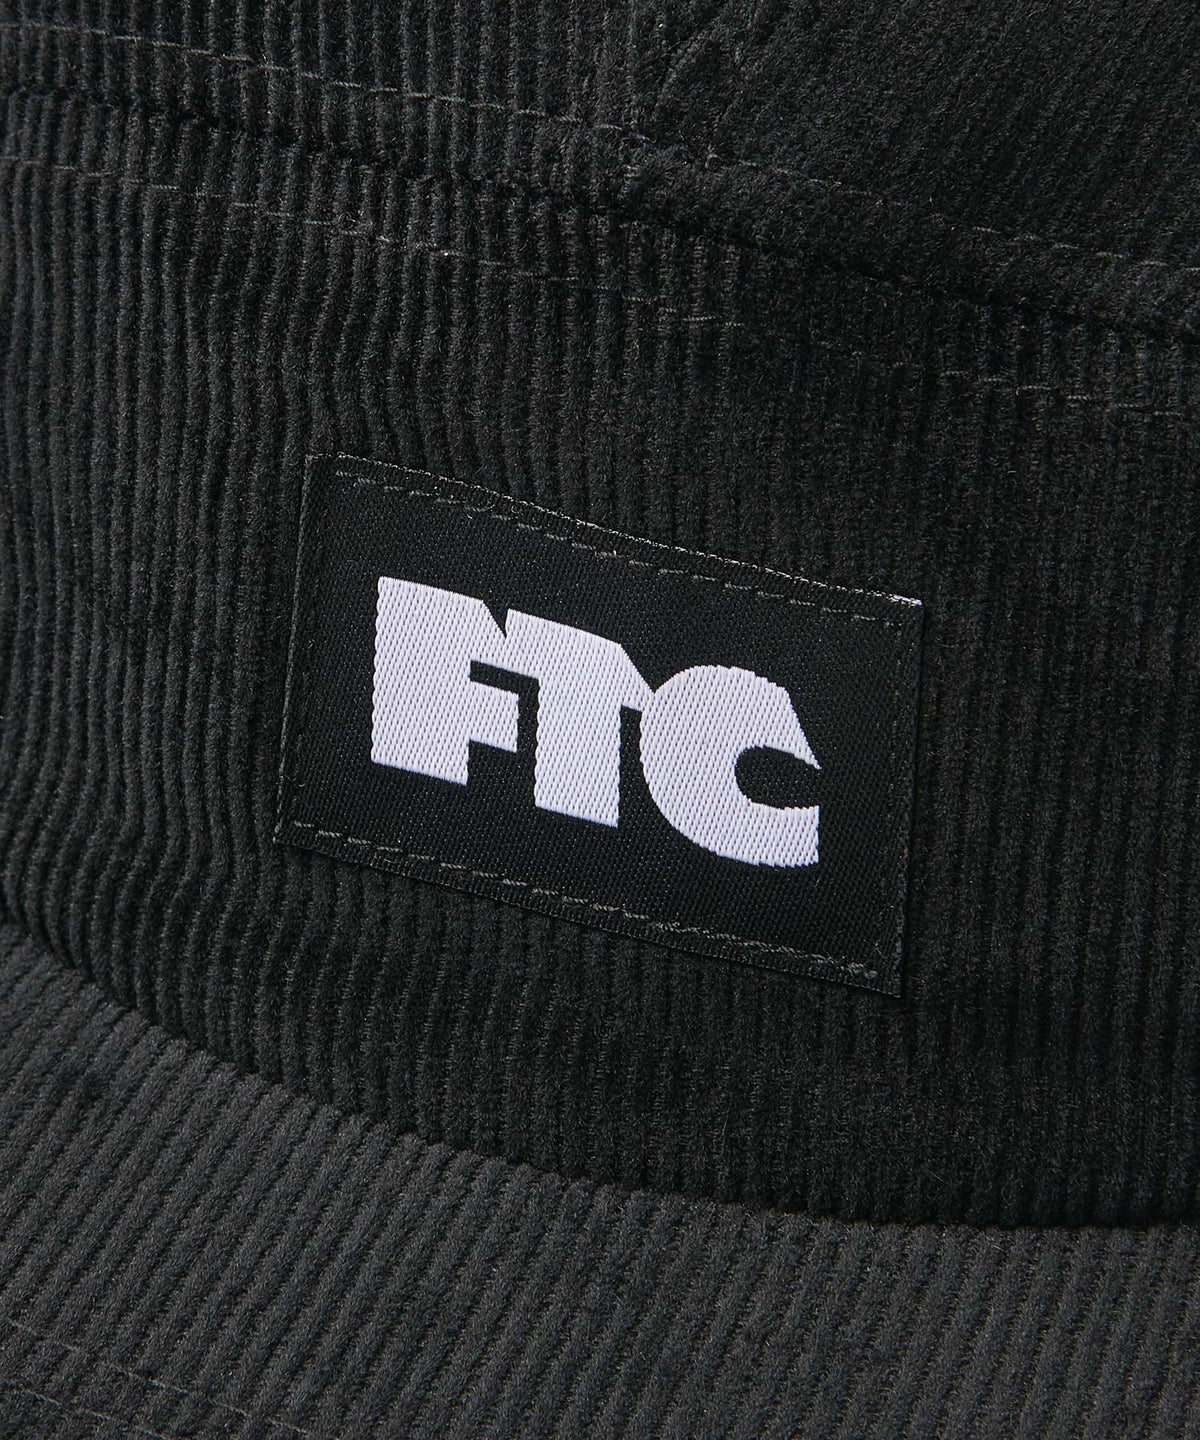 FTC CORD CAMPER CAP